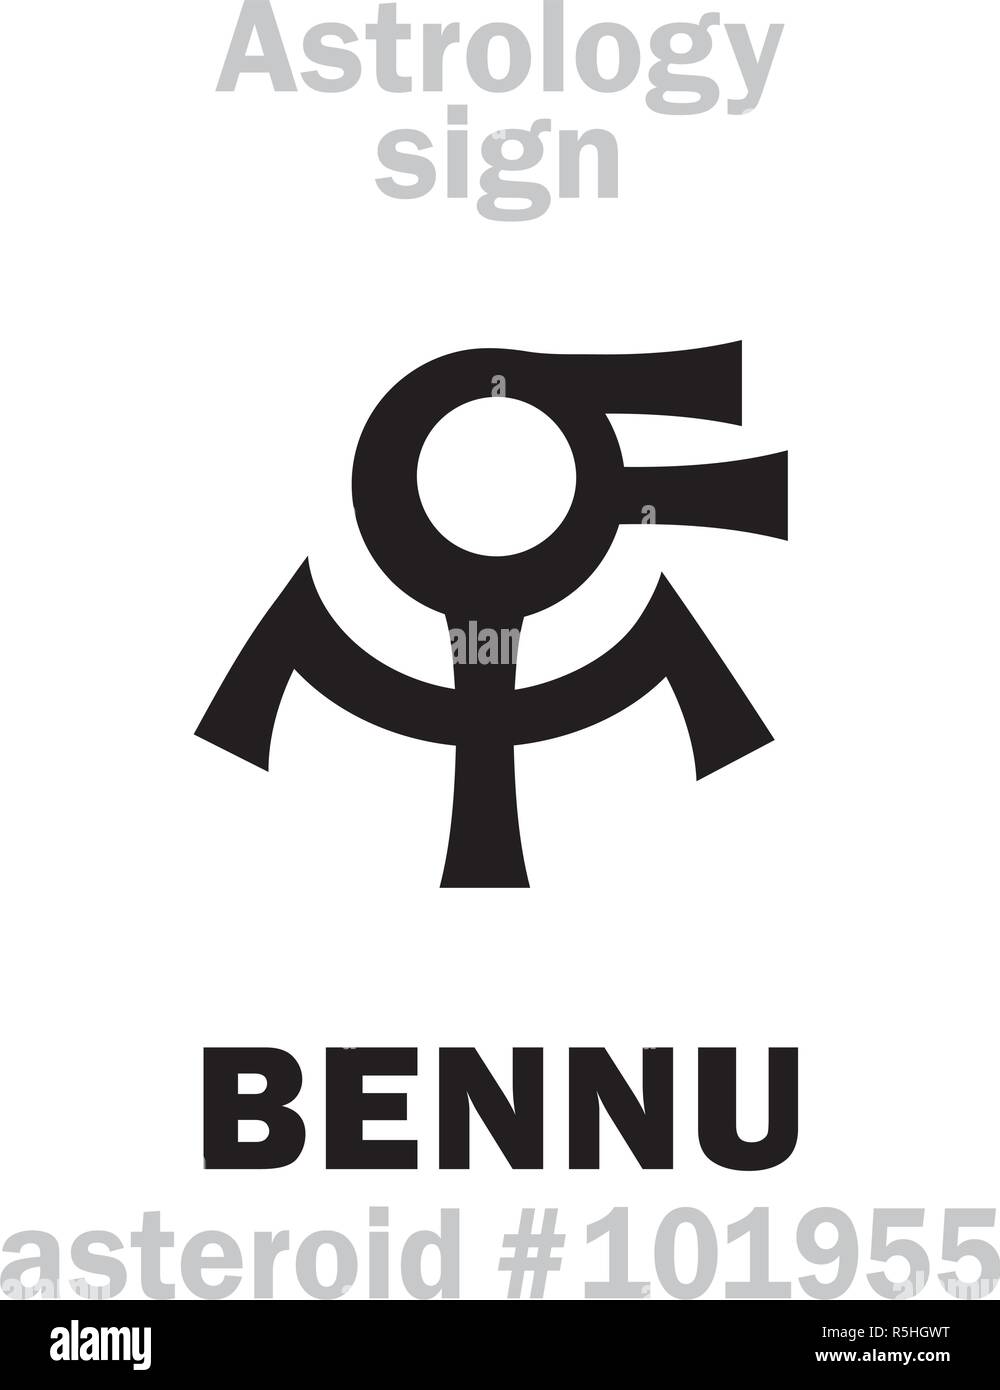 Astrology Alphabet: BENNU (Ba of Ra, The Egyptian Phœnix), potentially hazardous asteroid #101955. Hieroglyphics character sign (single symbol). Stock Vector